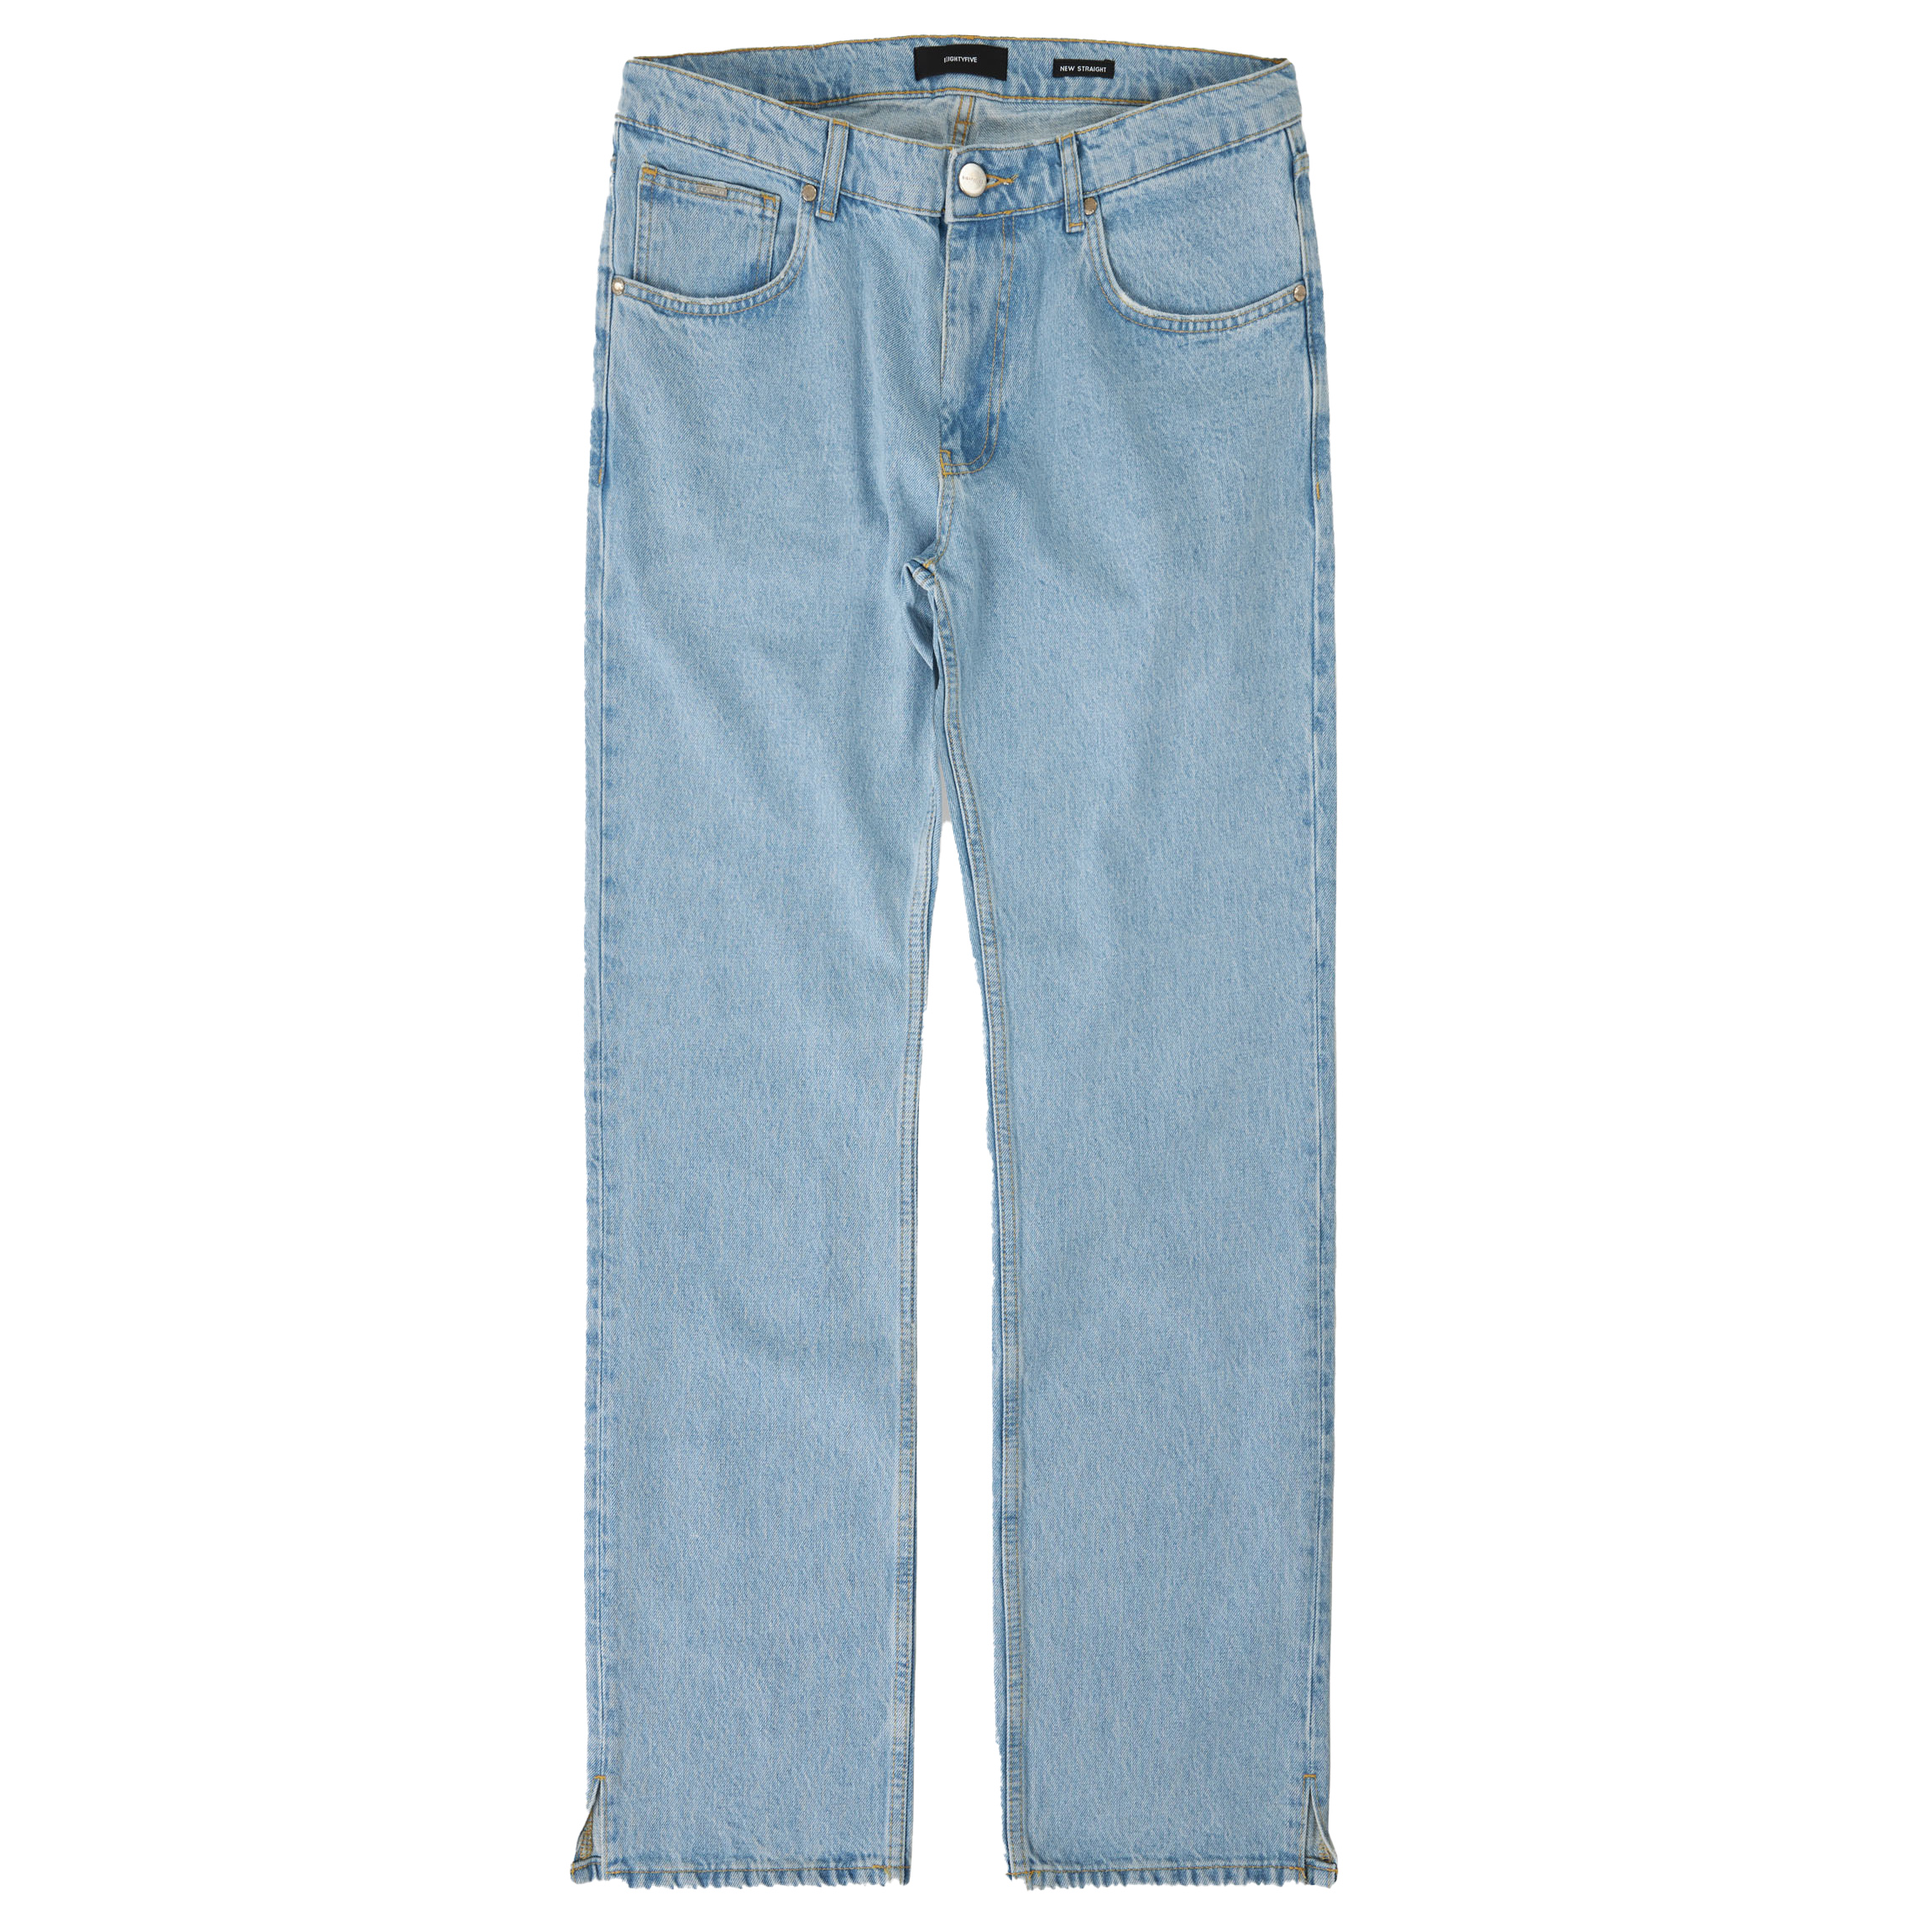 Get the EightyFive Split Hem Jeans! | KICKZ